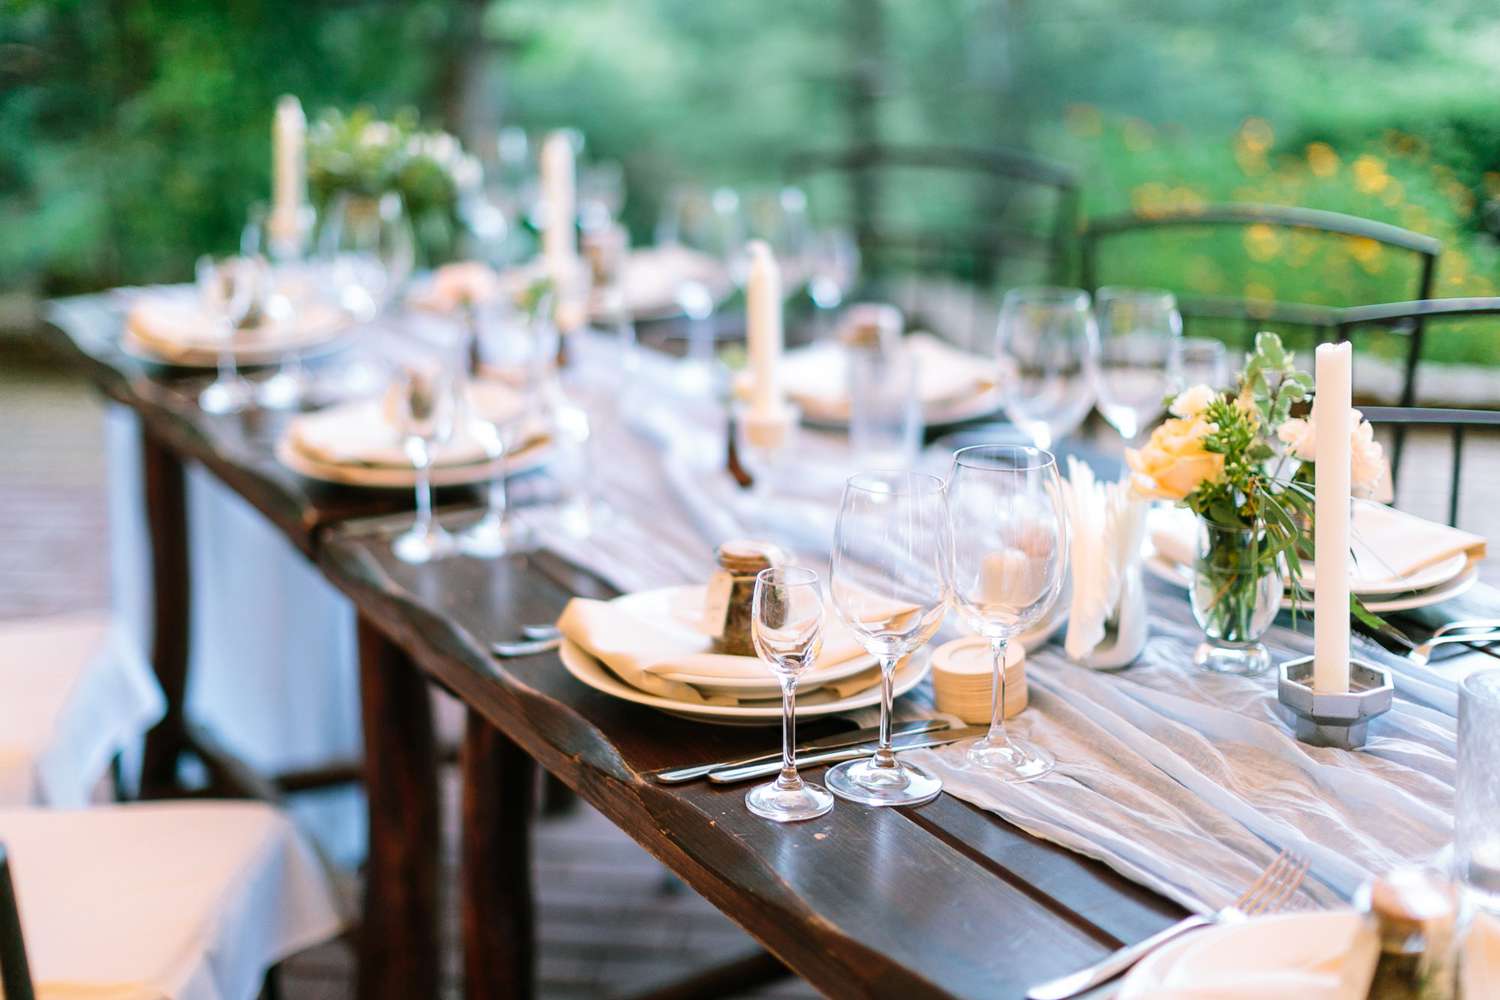 Wedding Menu Ideas: Outdoor table setting